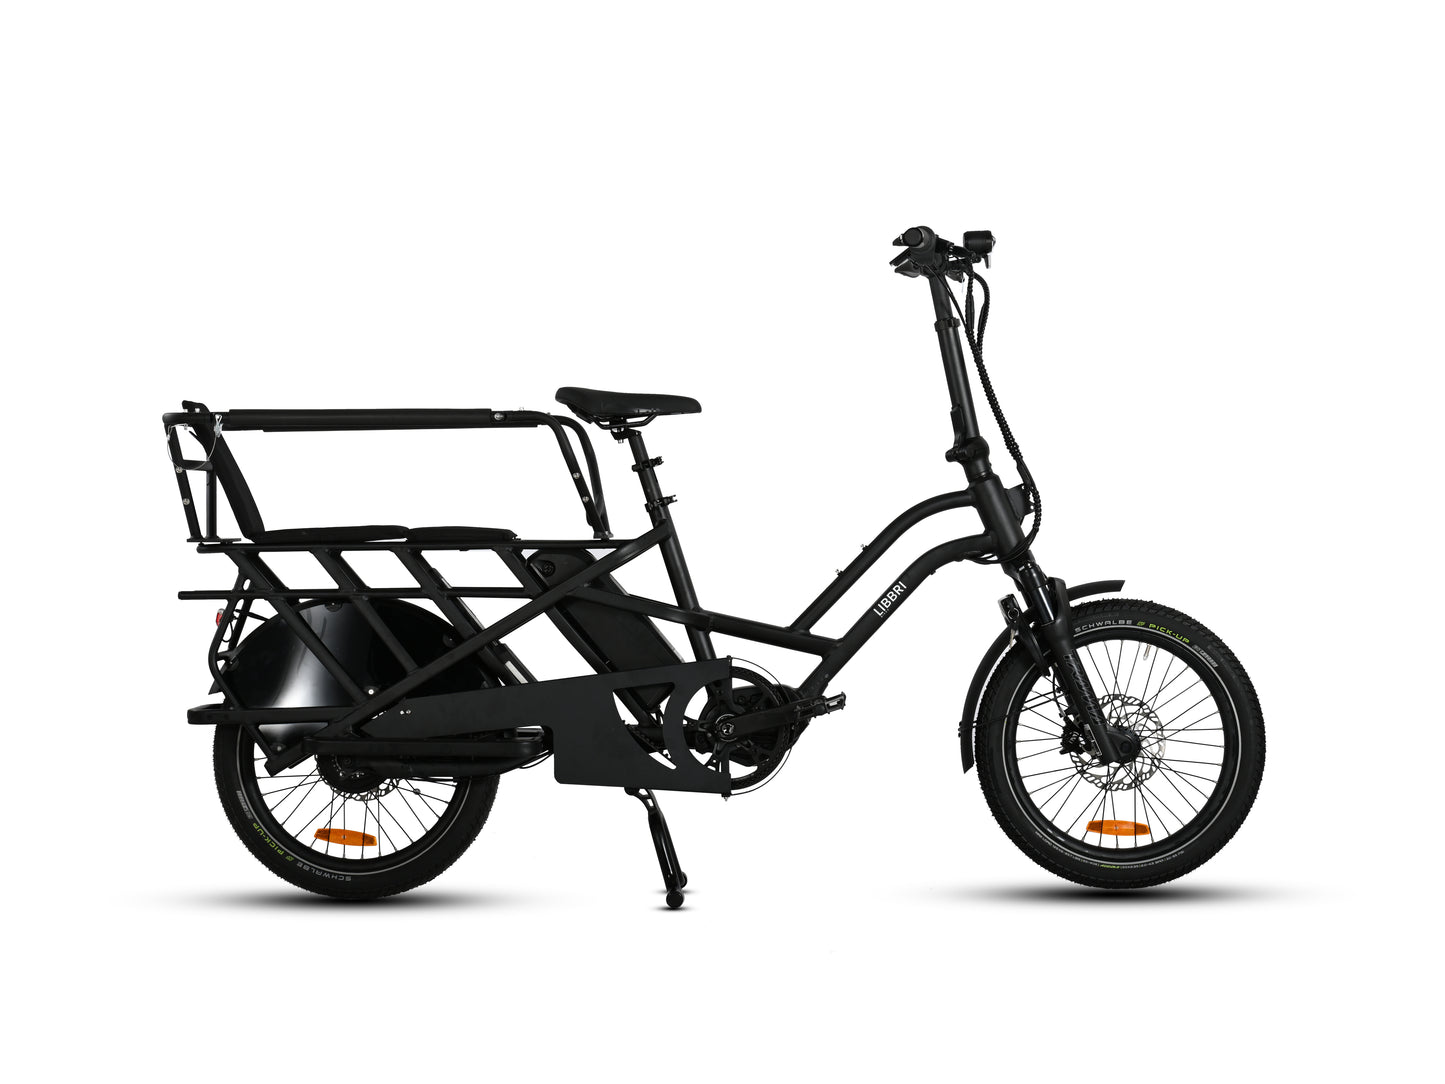 Libbri, the family cargo bike